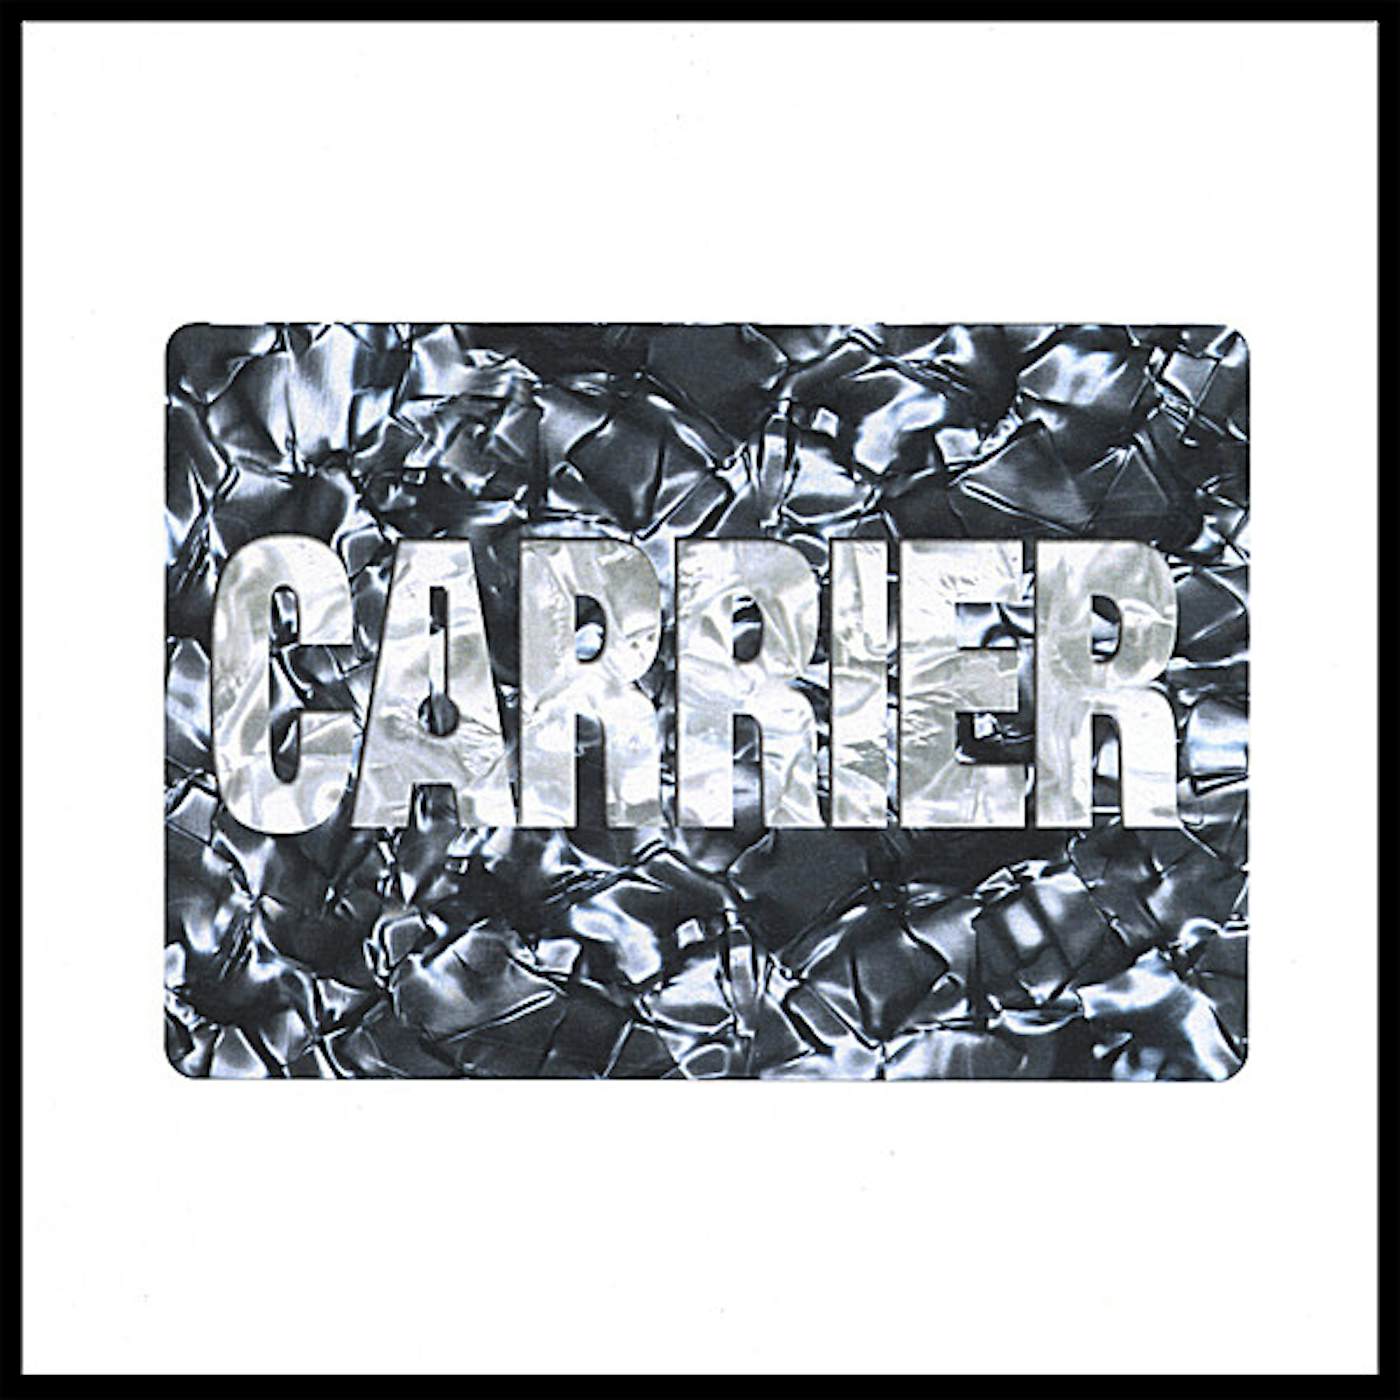 Carrier FOLEY ARTISTS CD